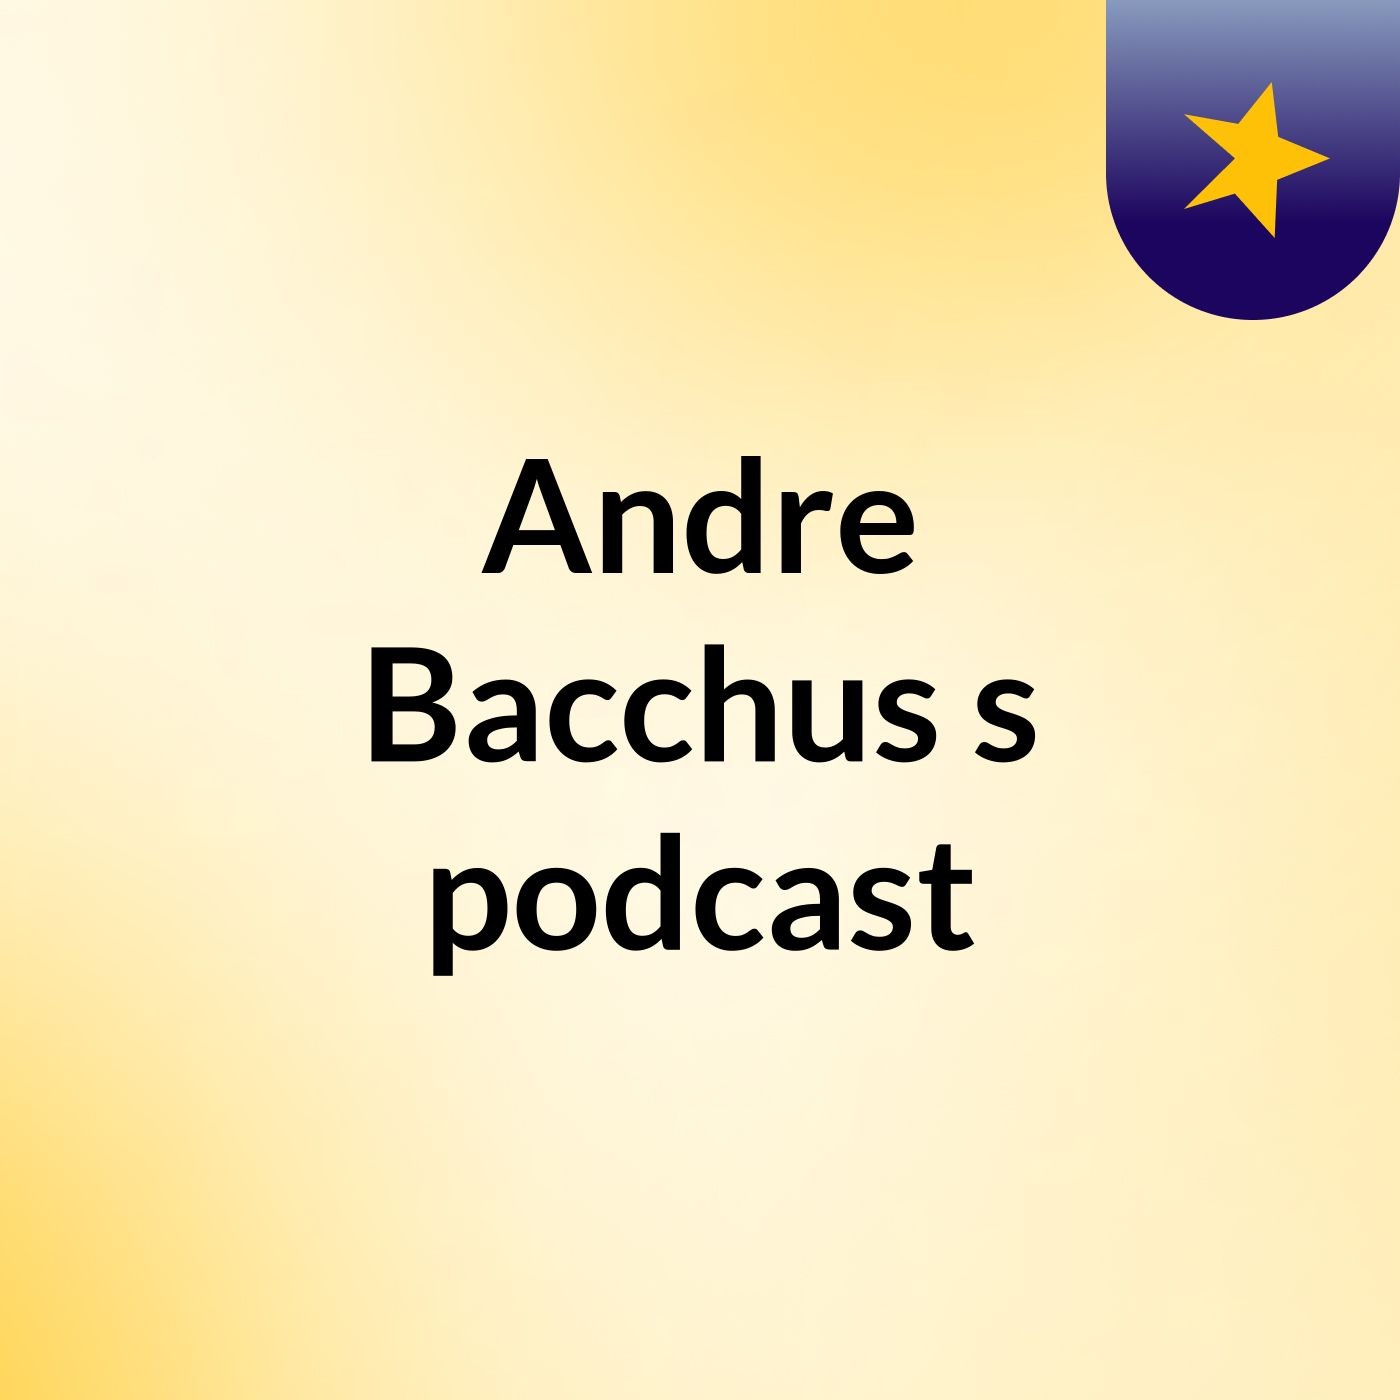 Episode 20 - Andre Bacchus's podcast